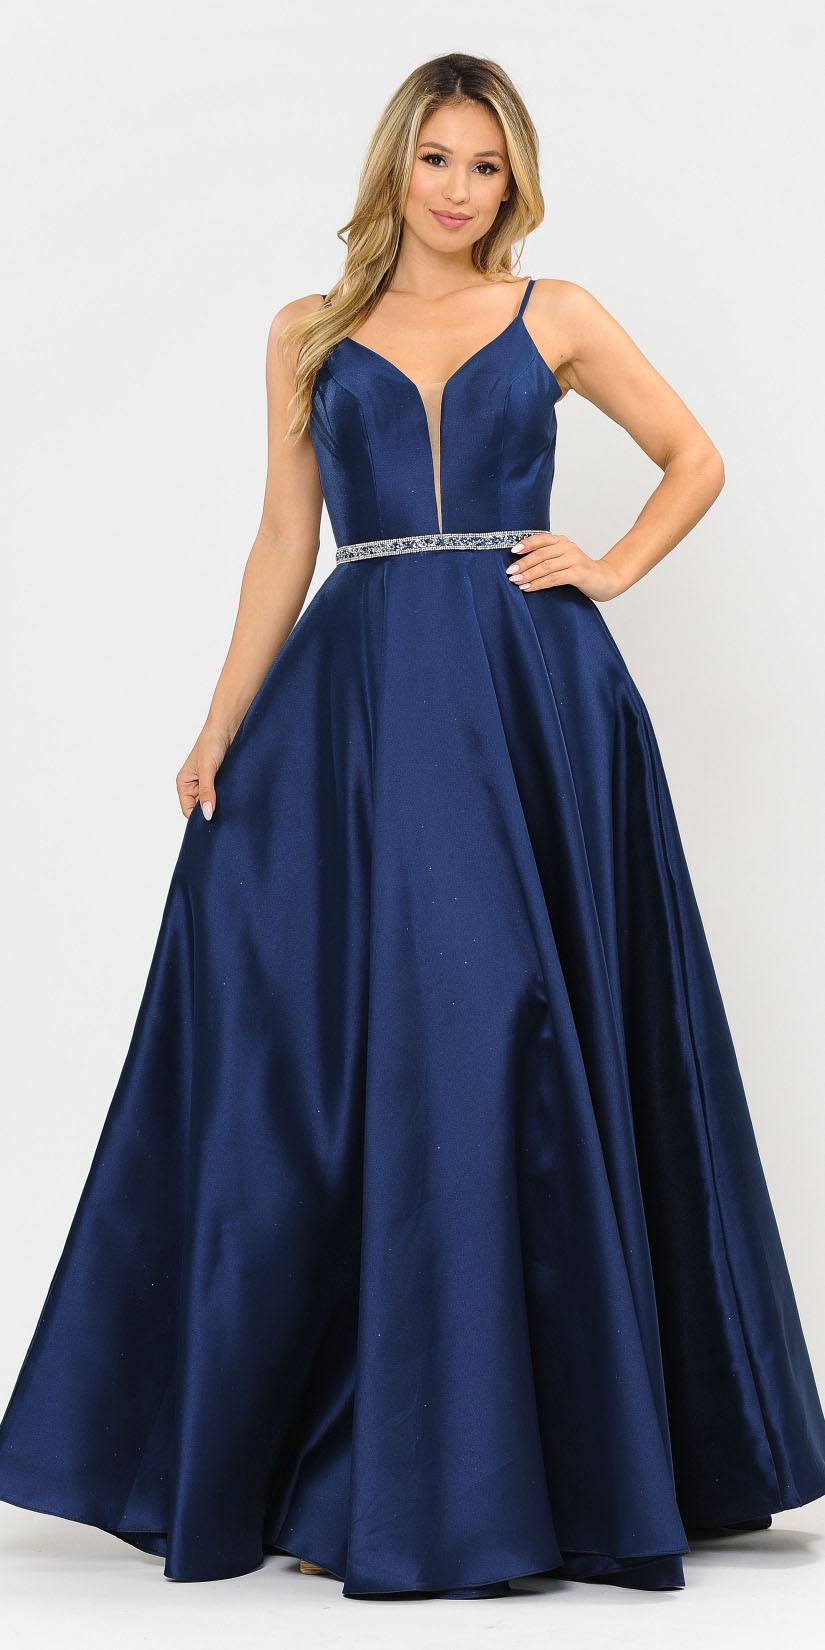 Poly USA 8672 Long Satin Prom Dress with Spaghetti Straps Navy Blue